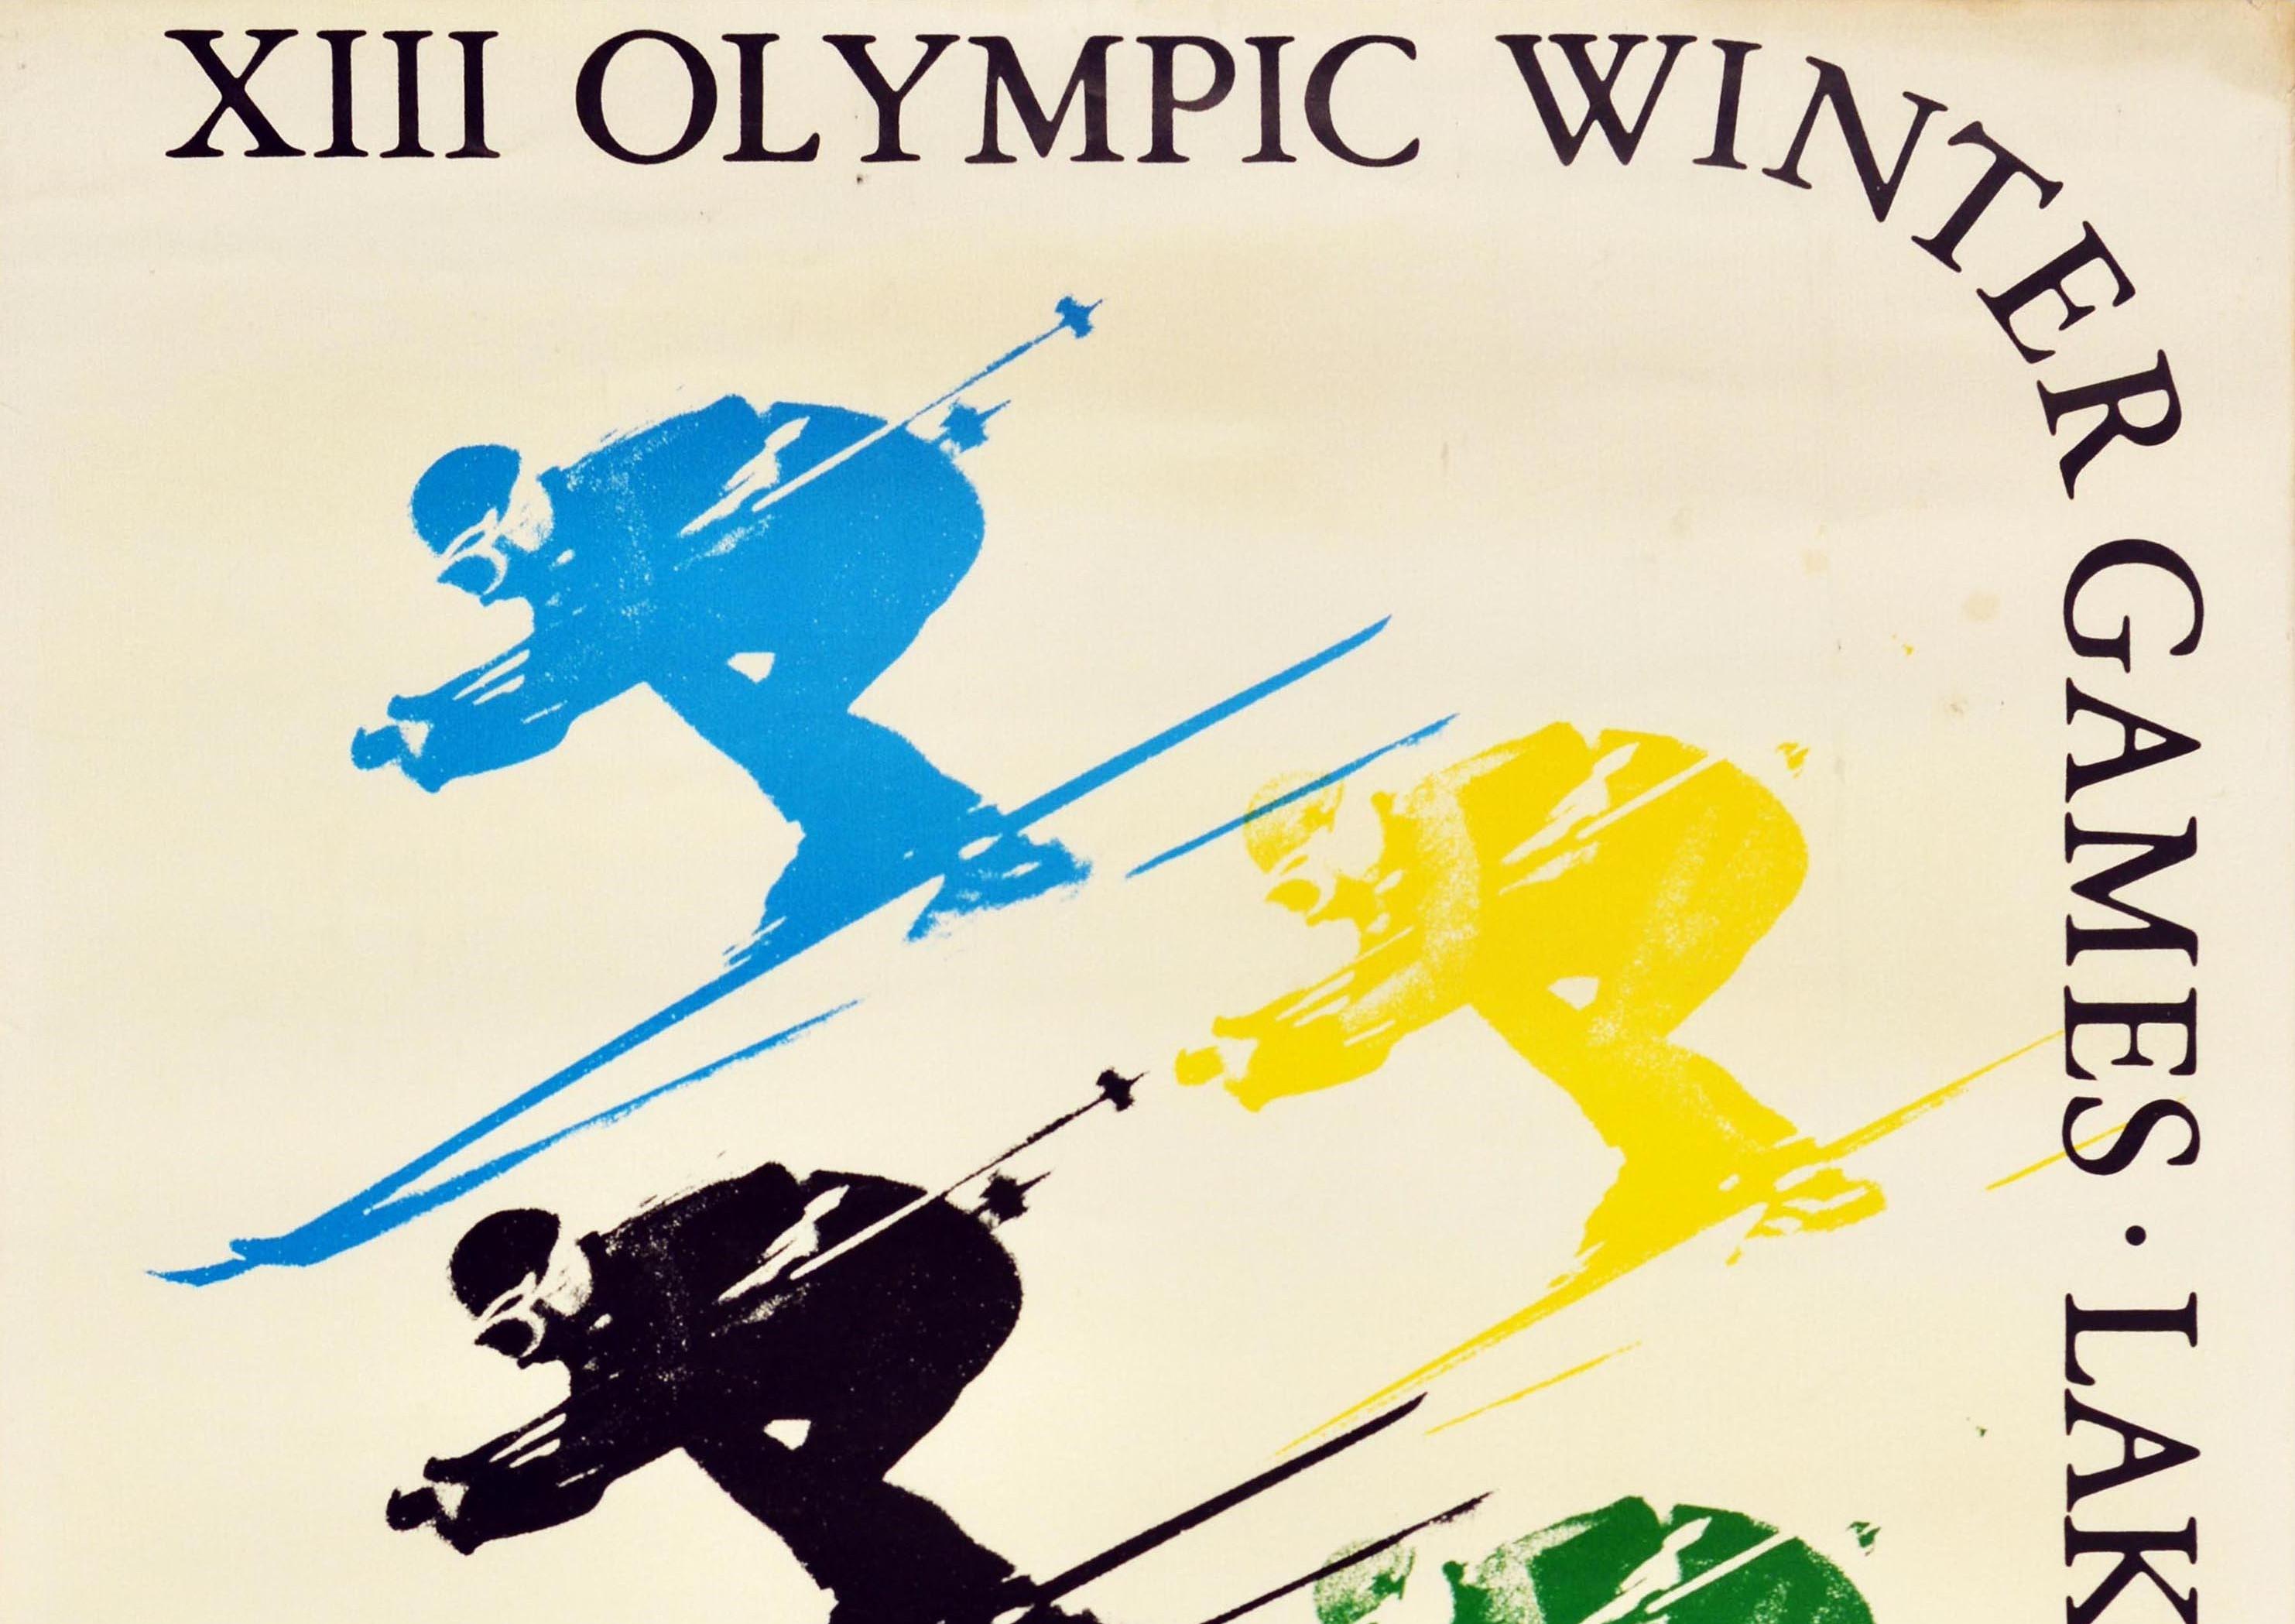 lake placid olympics poster